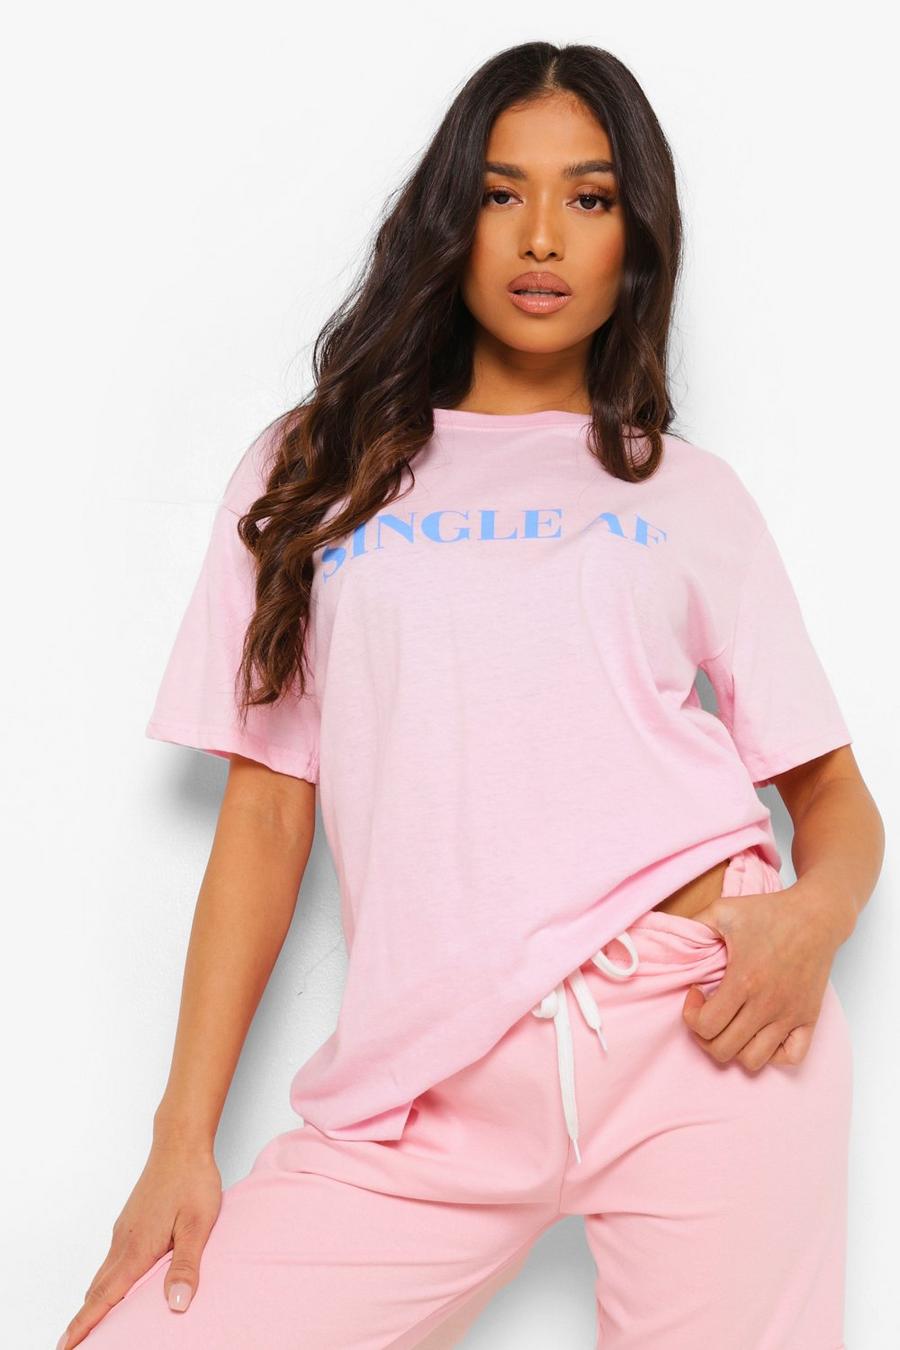 Pale pink Petite 'Single Af' Graphic T-Shirt image number 1